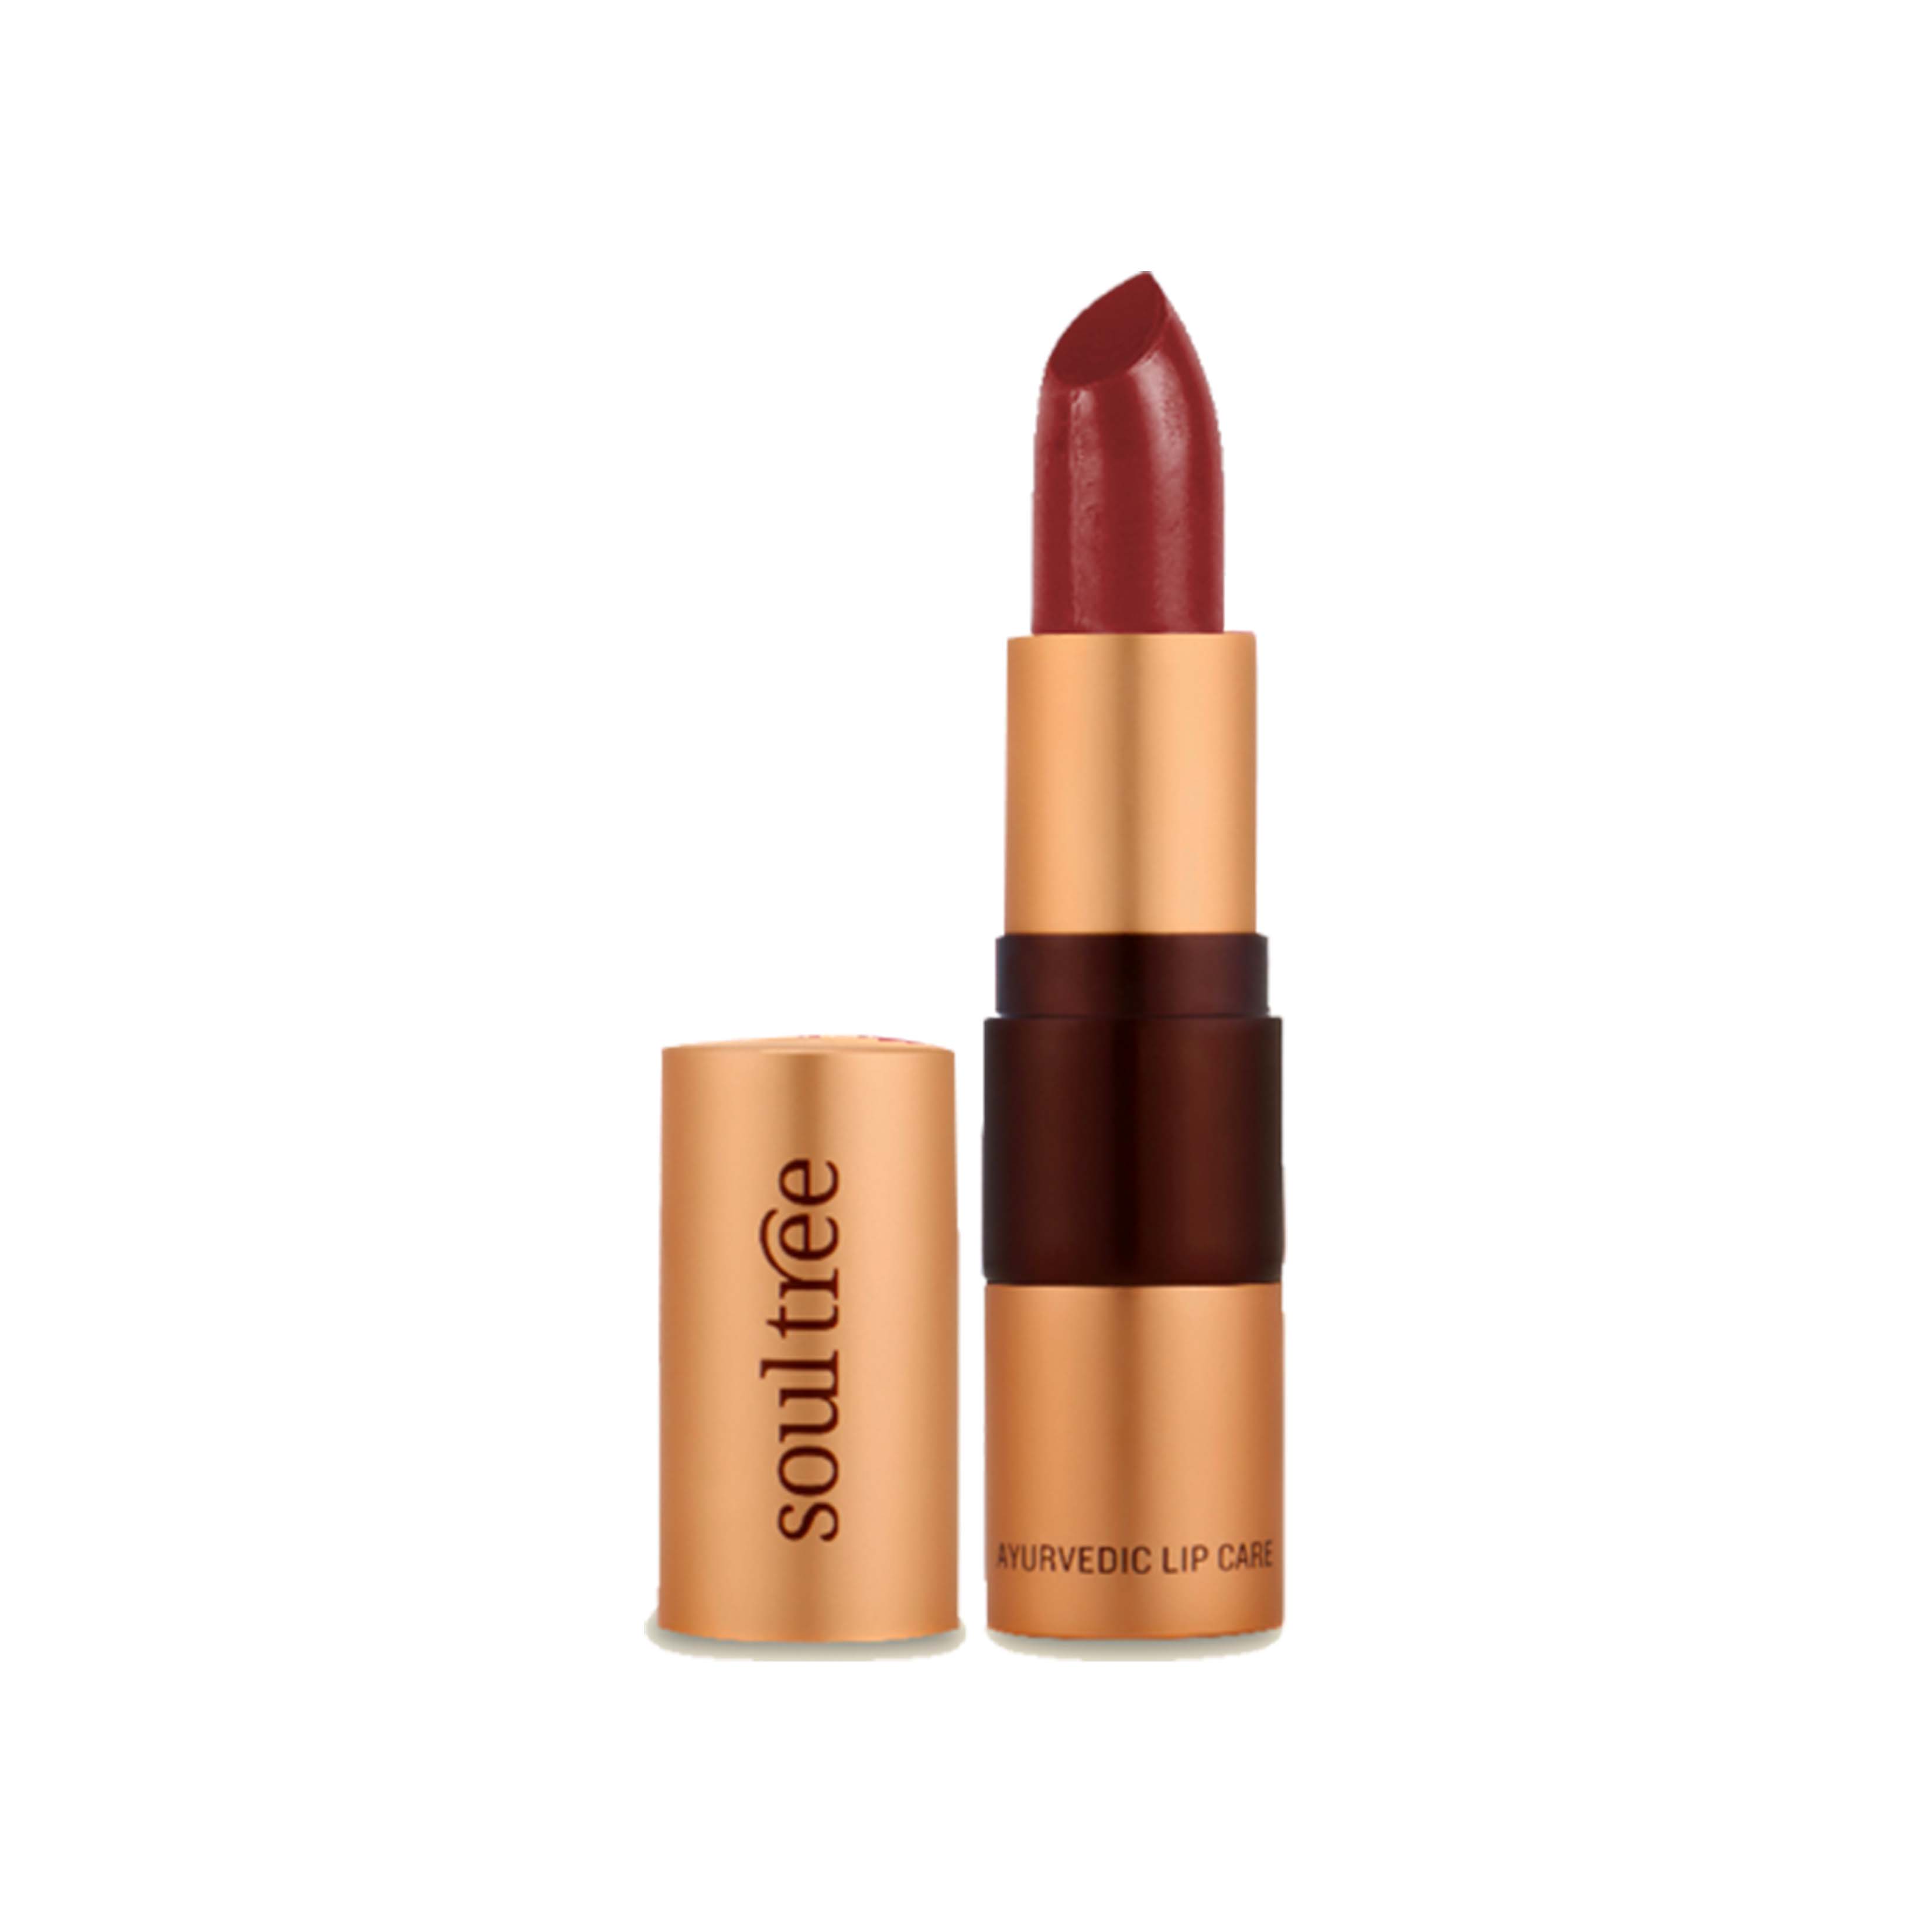 Lipstick Java Brown 810 - SoulTree